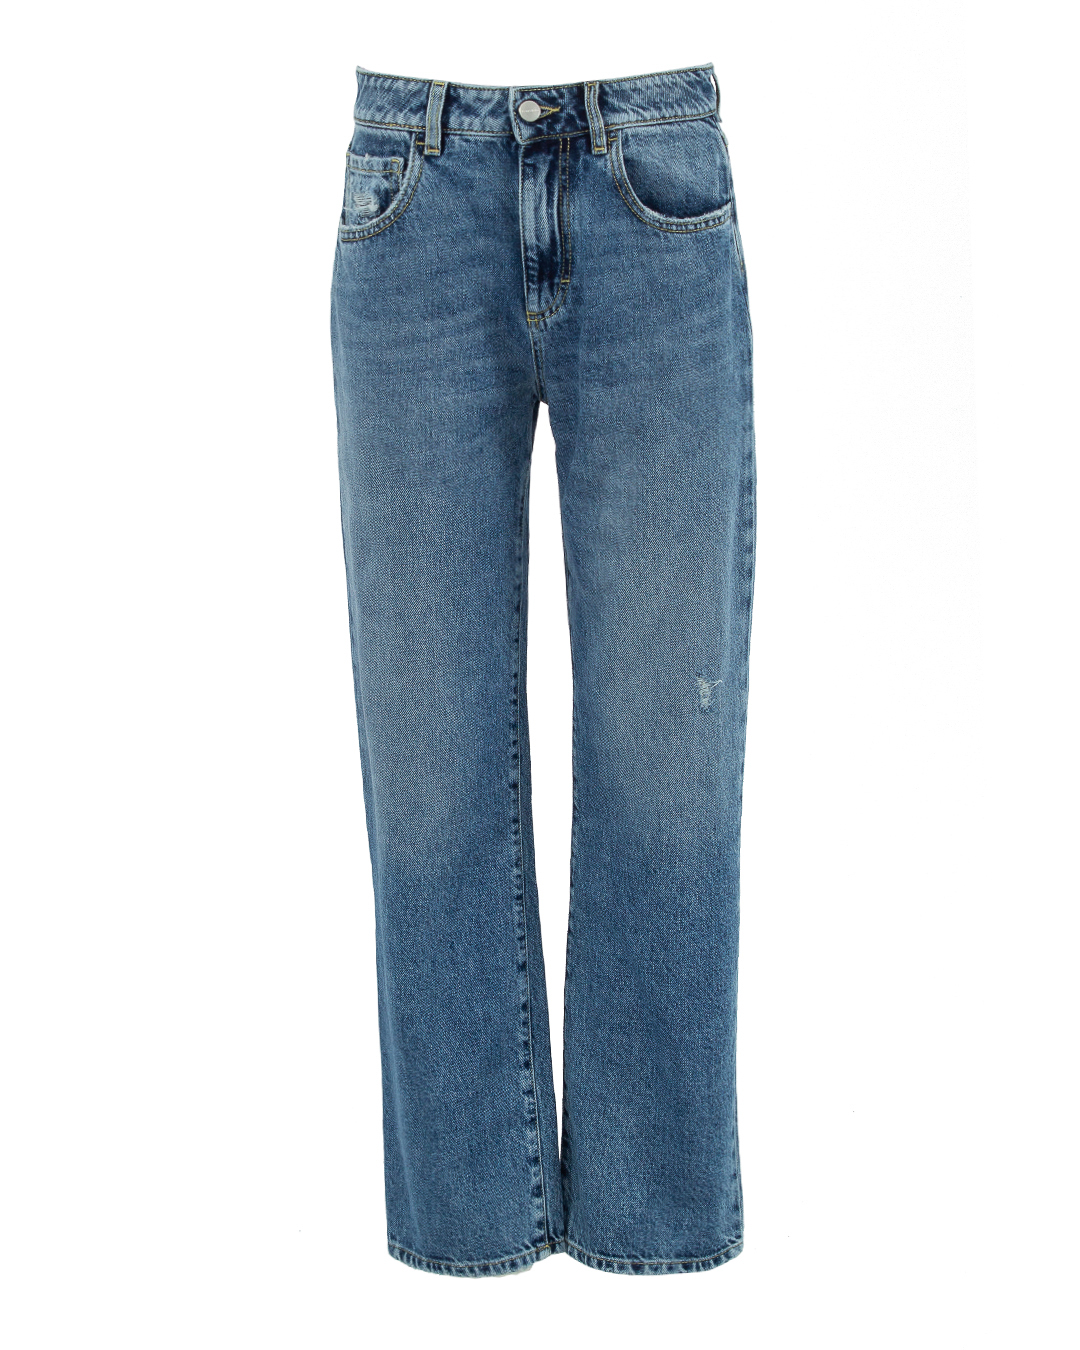 джинсы ICON DENIM BELLAID709 синий 25, размер 25 - фото 1